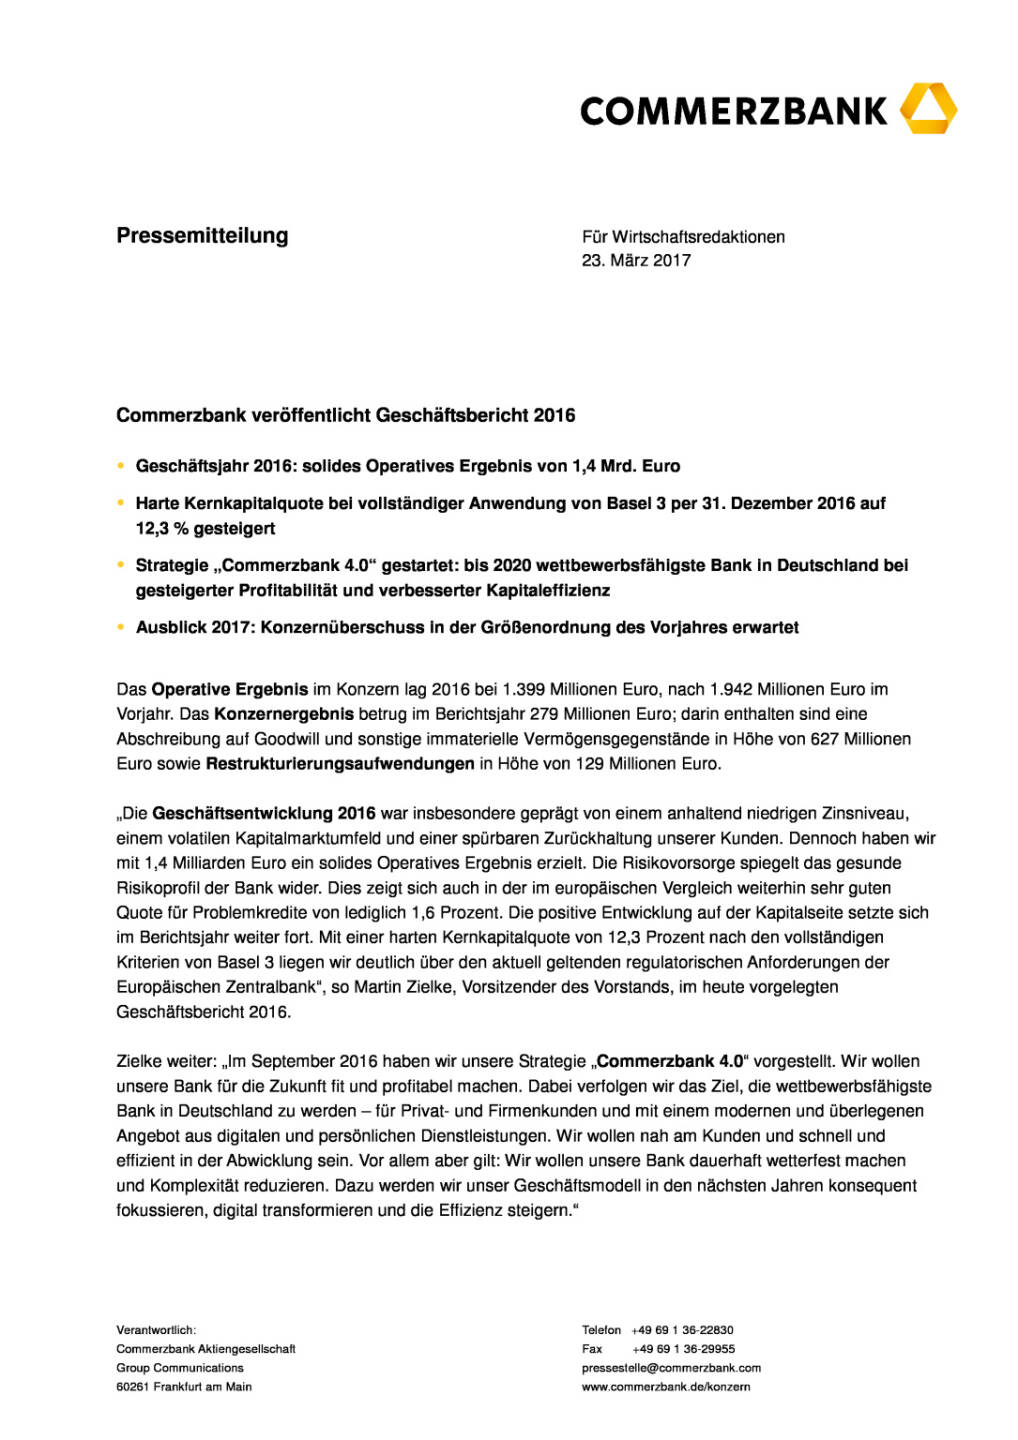 Commerzbank veröffentlicht Geschäftsbericht 2016, Seite 1/4, komplettes Dokument unter http://boerse-social.com/static/uploads/file_2177_commerzbank_veroffentlicht_geschaftsbericht_2016.pdf